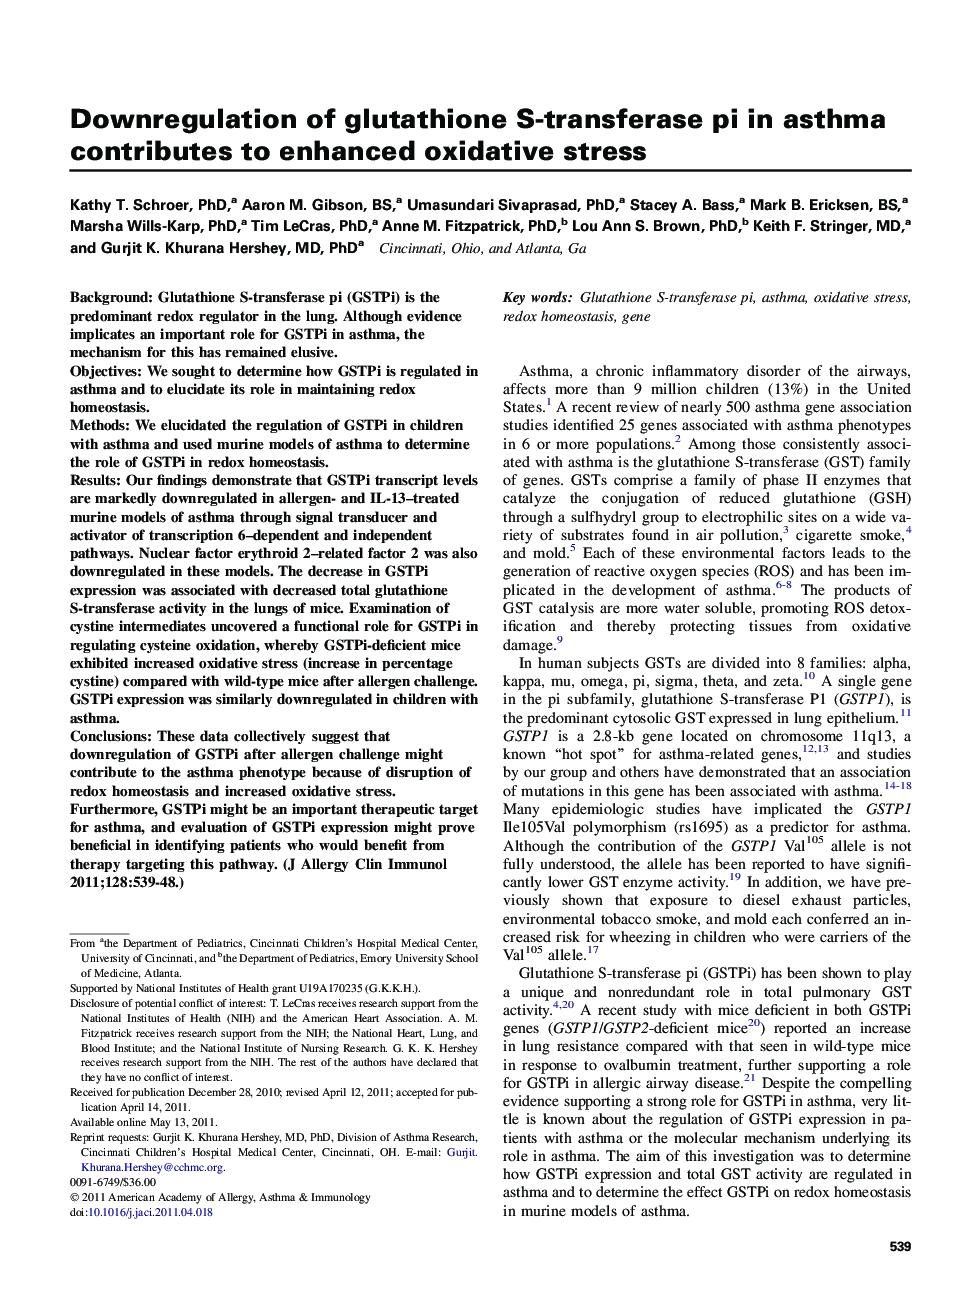 Downregulation of glutathione S-transferase pi in asthma contributes to enhanced oxidative stress 